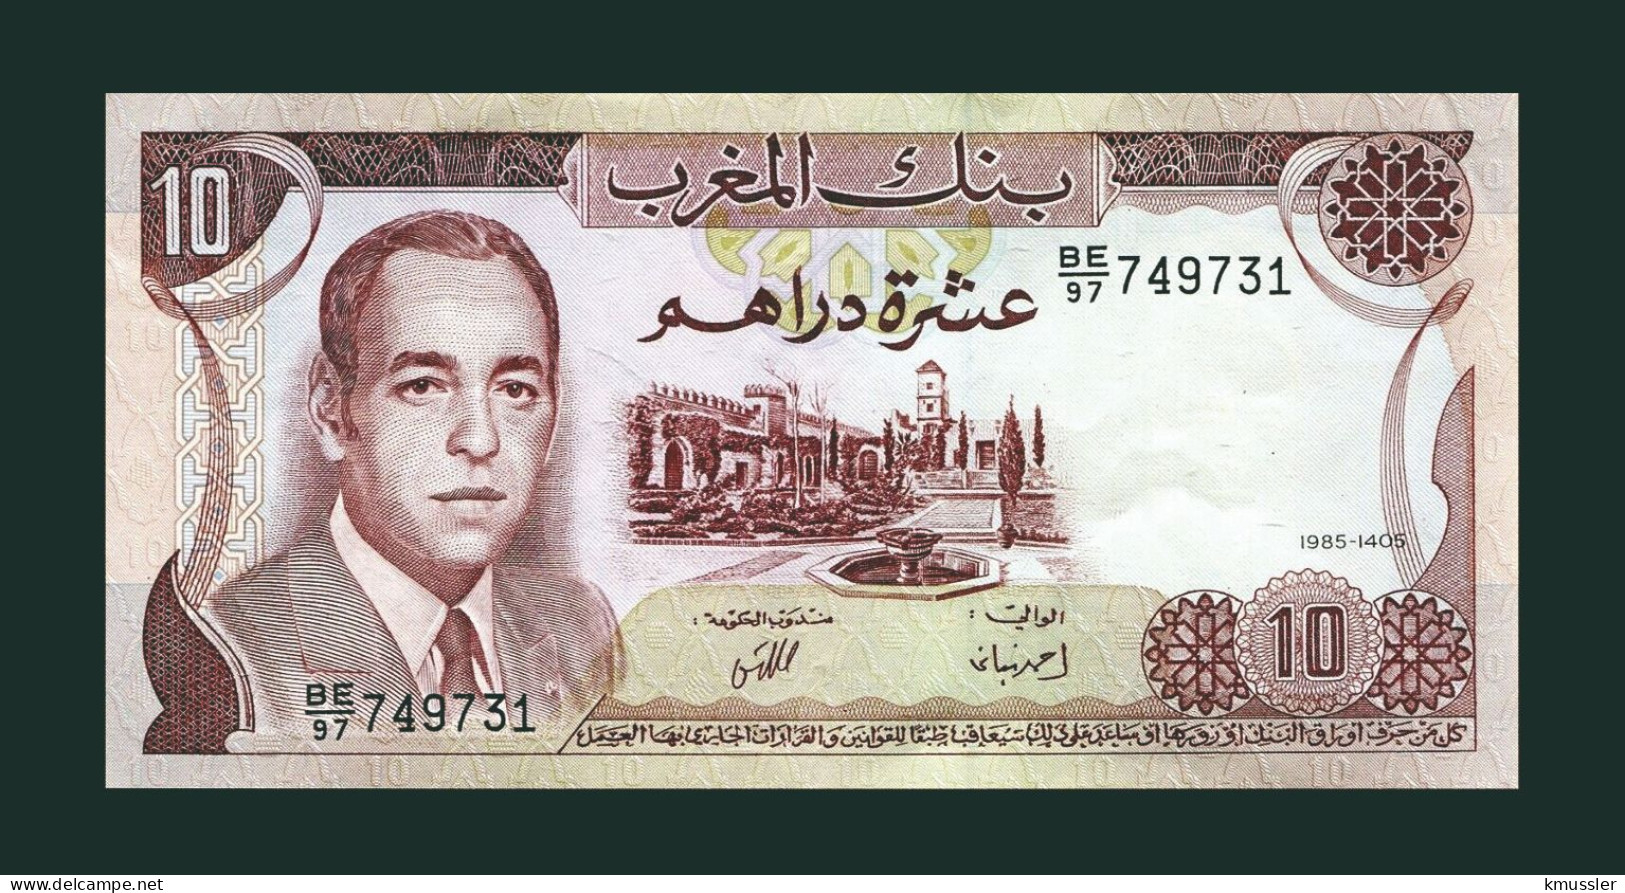 # # # Banknote Marokko (Morocco) 10 Dirham 1985 (P-57) UNC # # # - Marokko